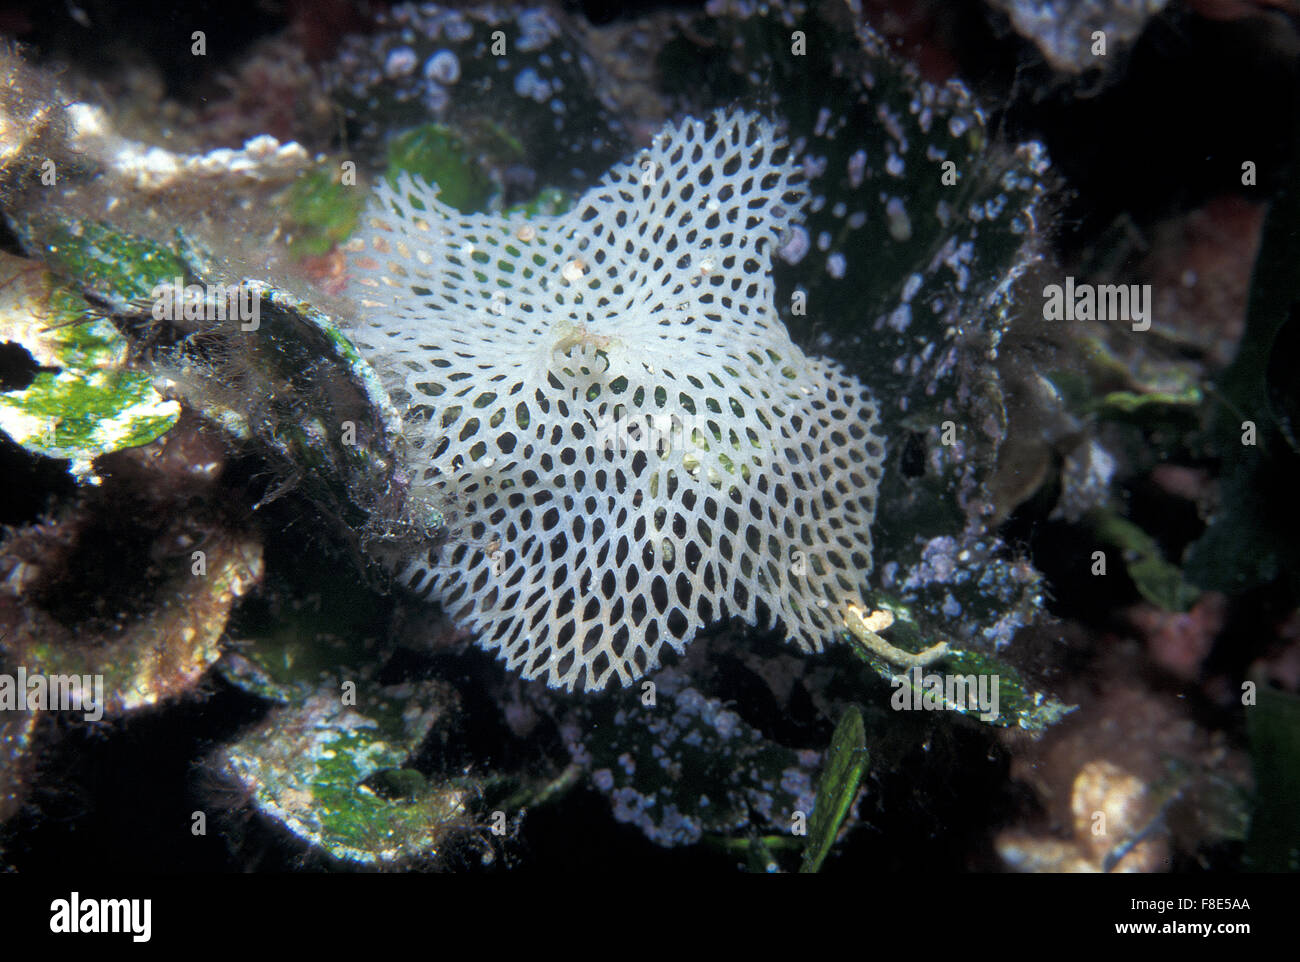 Neptunes lace, Reteporella grimaldii, Phidoloporidae Mediterranean Bryozoa, Giglio Island Tuscany, Mediterranean Sea, Italy Stock Photo